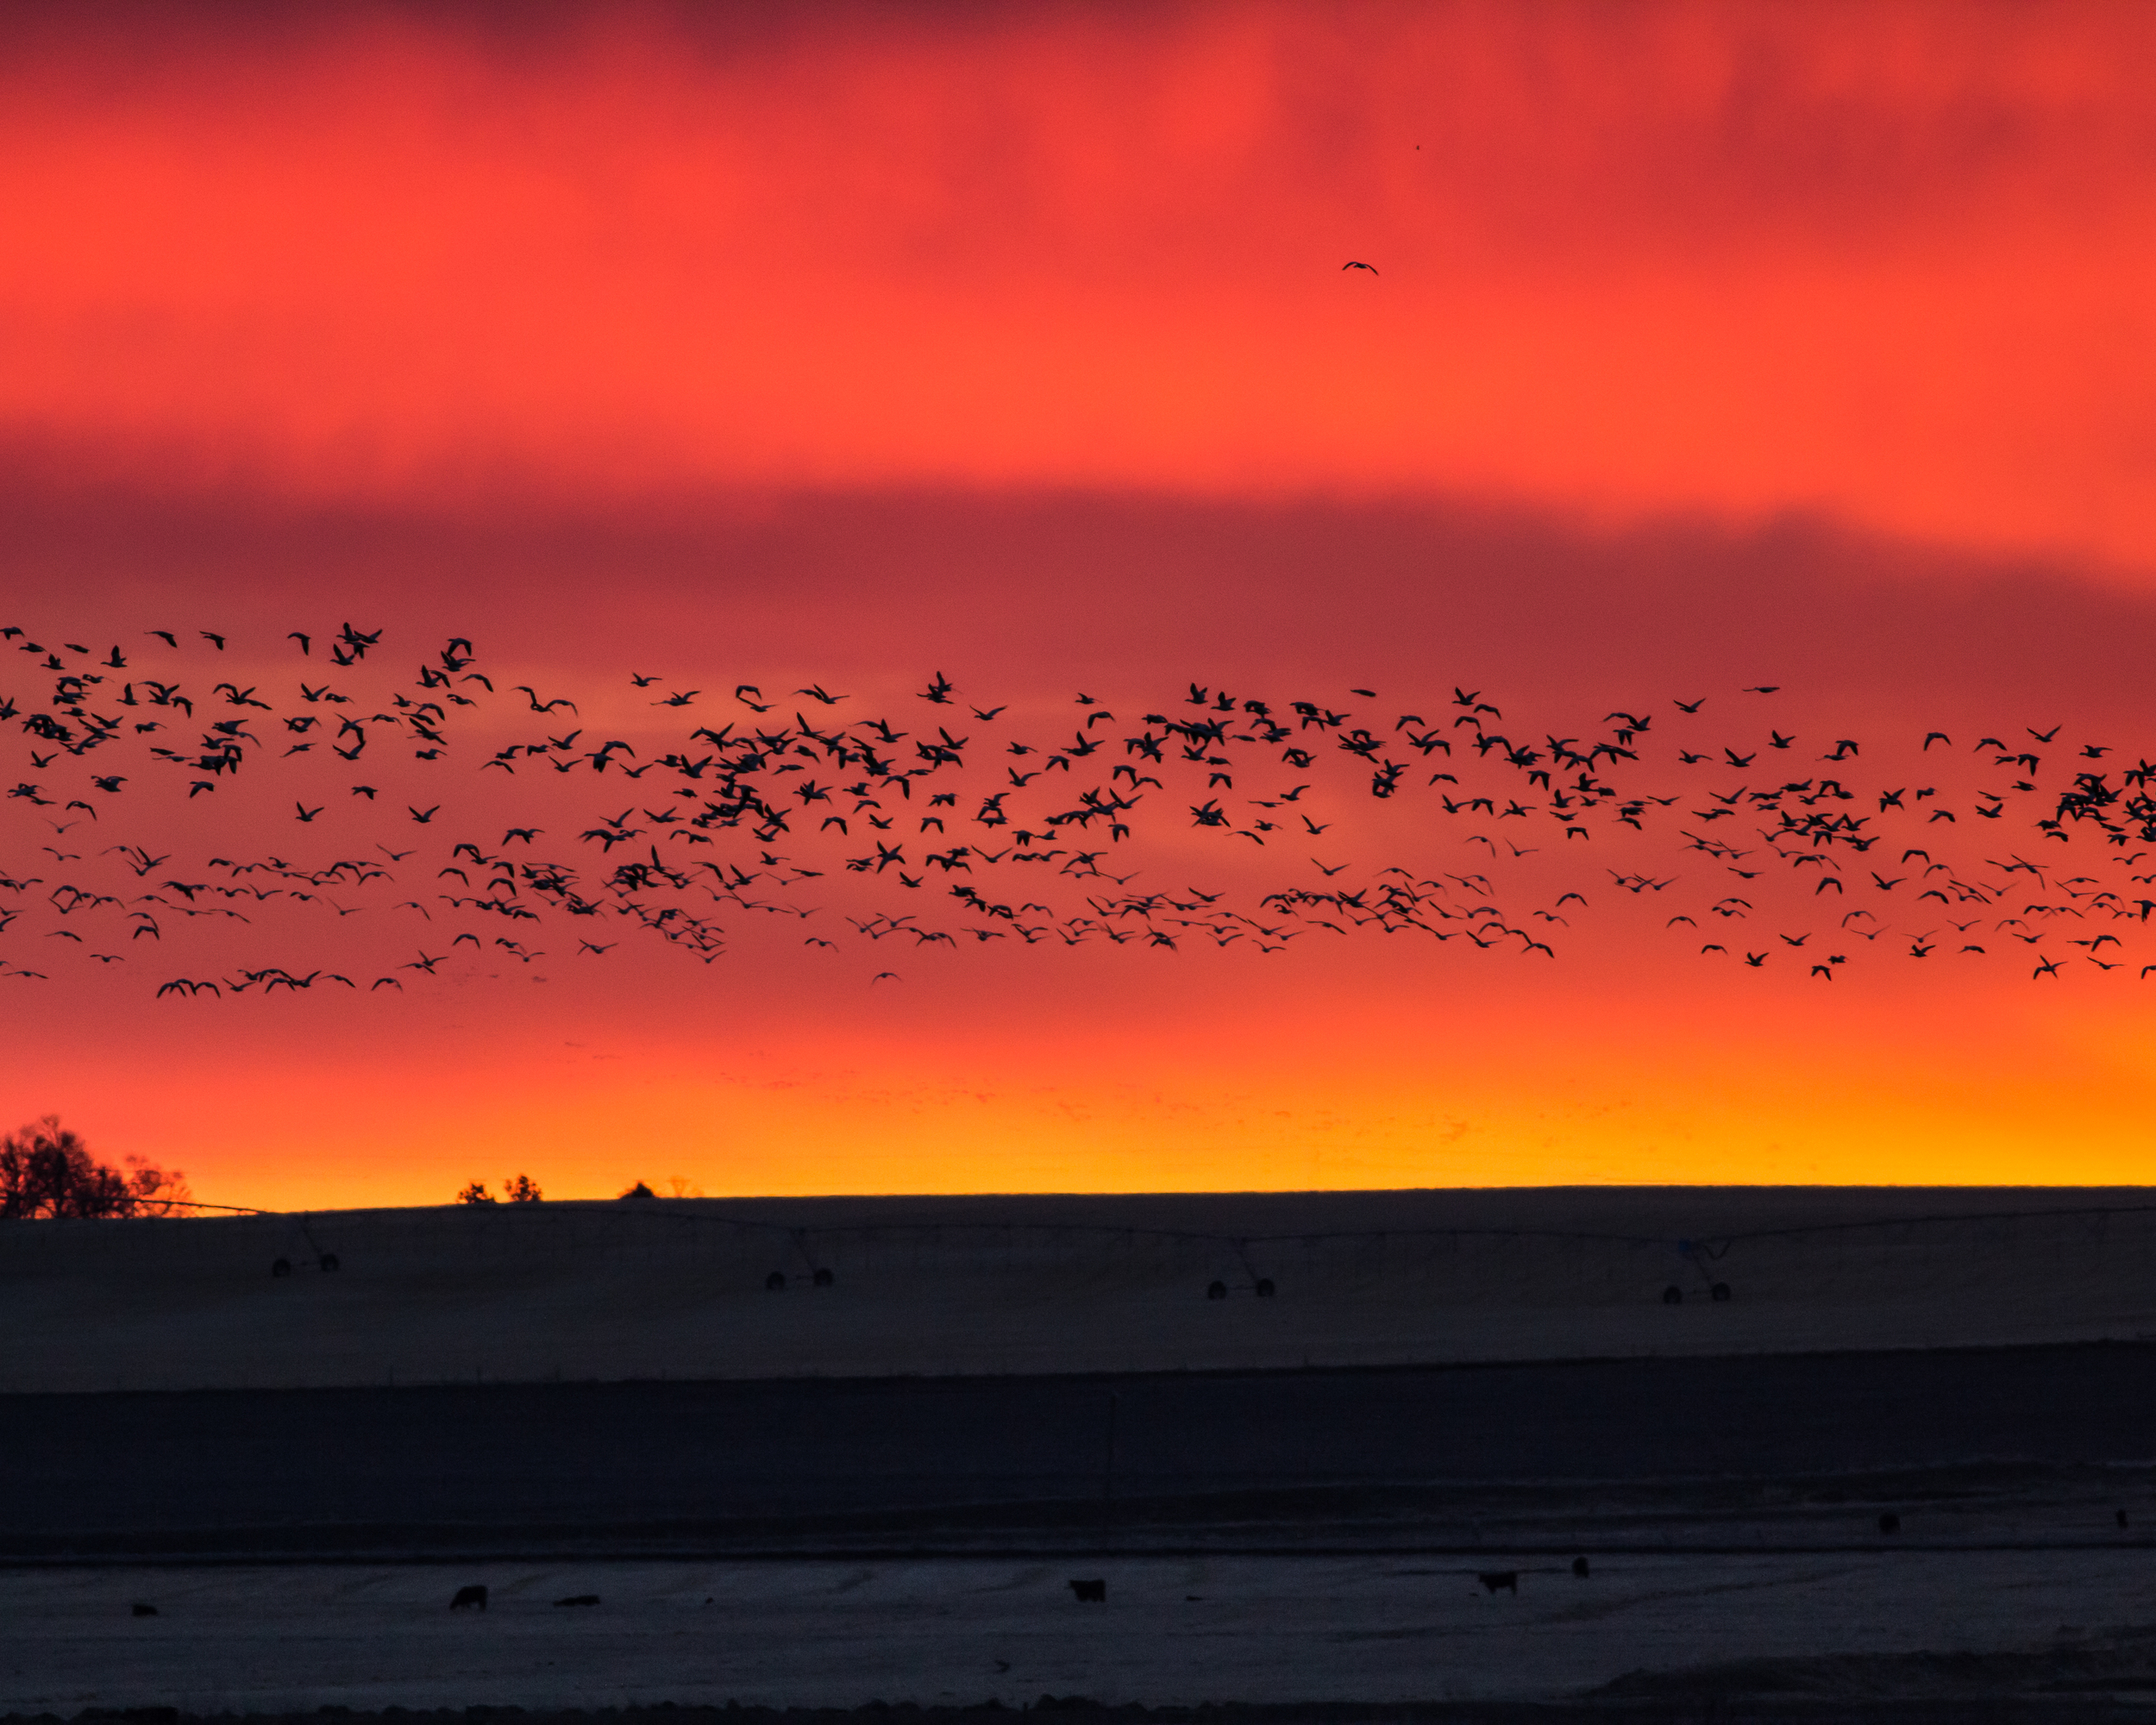 Snow Geese at Sunset, Freezeout Lake NWR